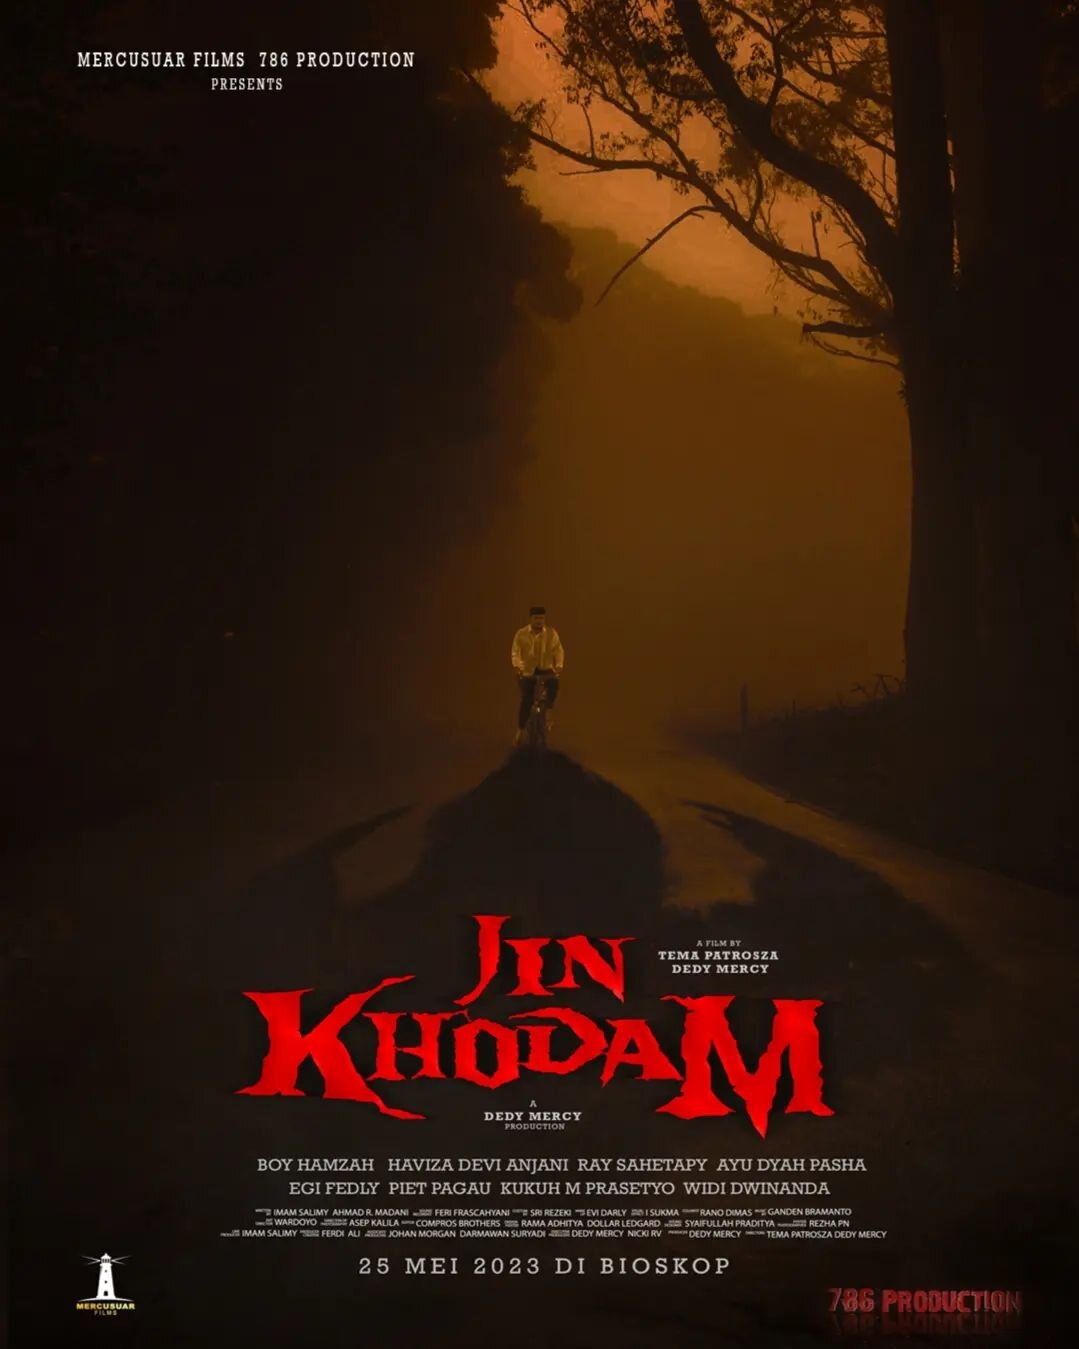 Jin Khodam - Sinopsis, Pemain, OST, Review